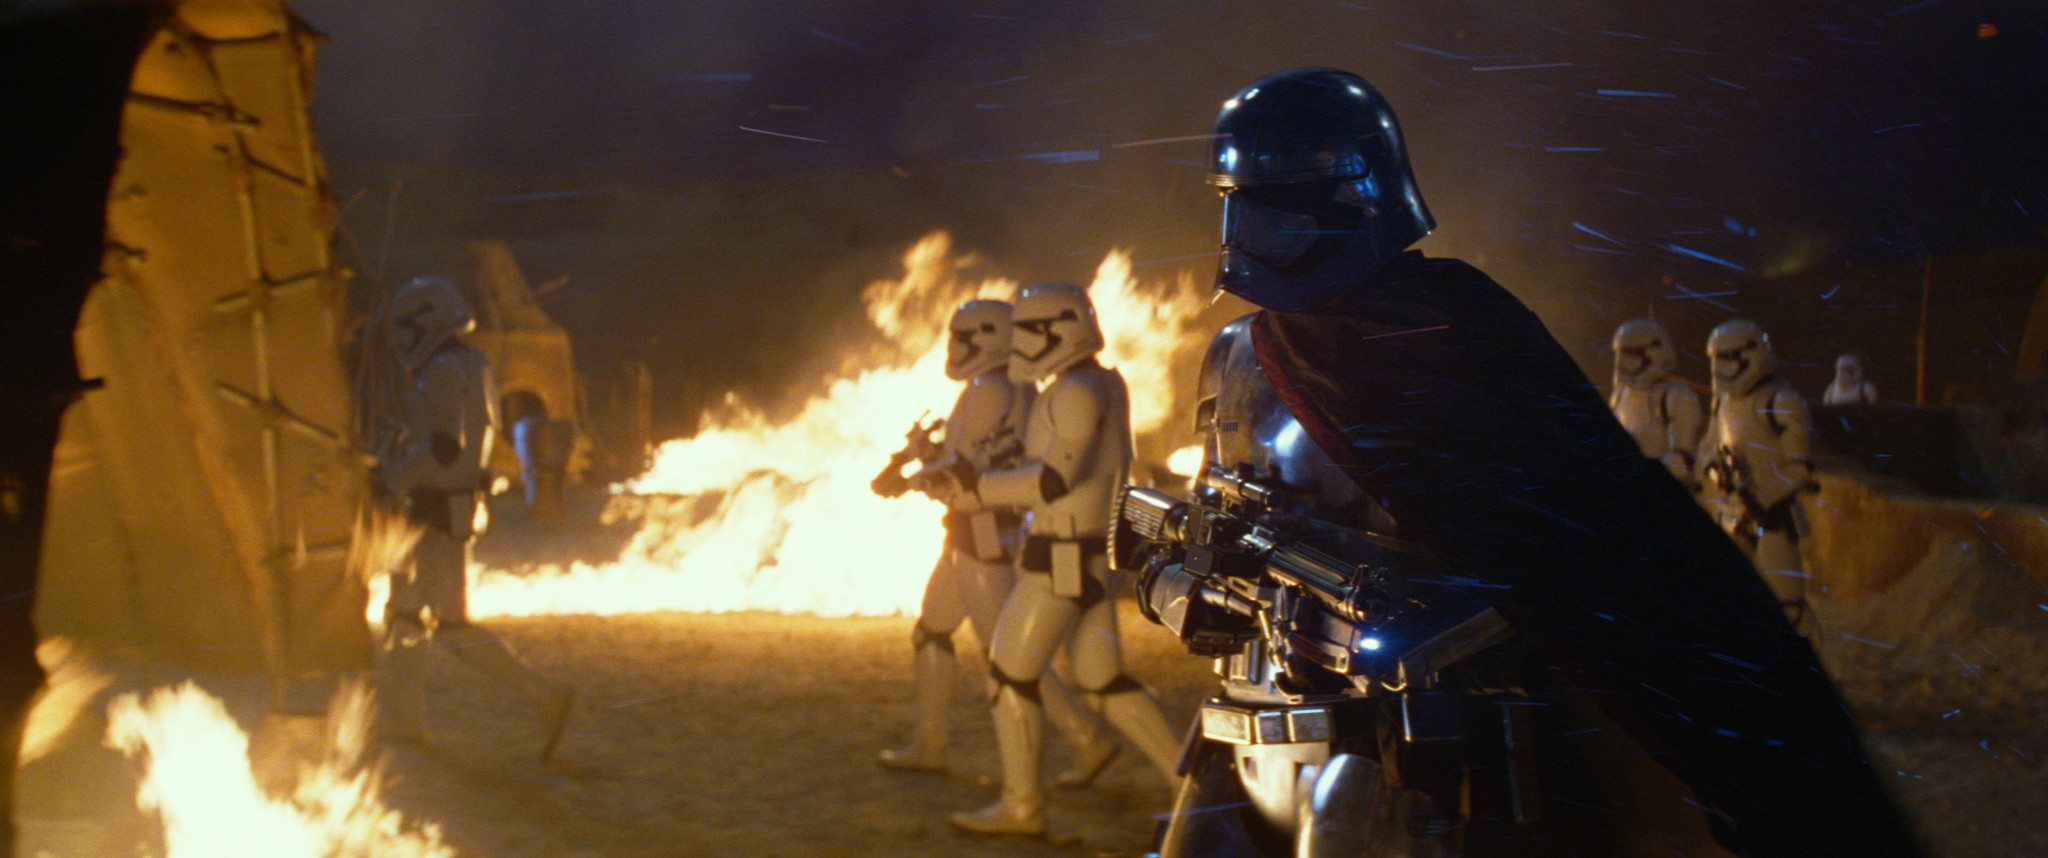 movie, star wars episode vii: the force awakens, captain phasma, star wars, stormtrooper